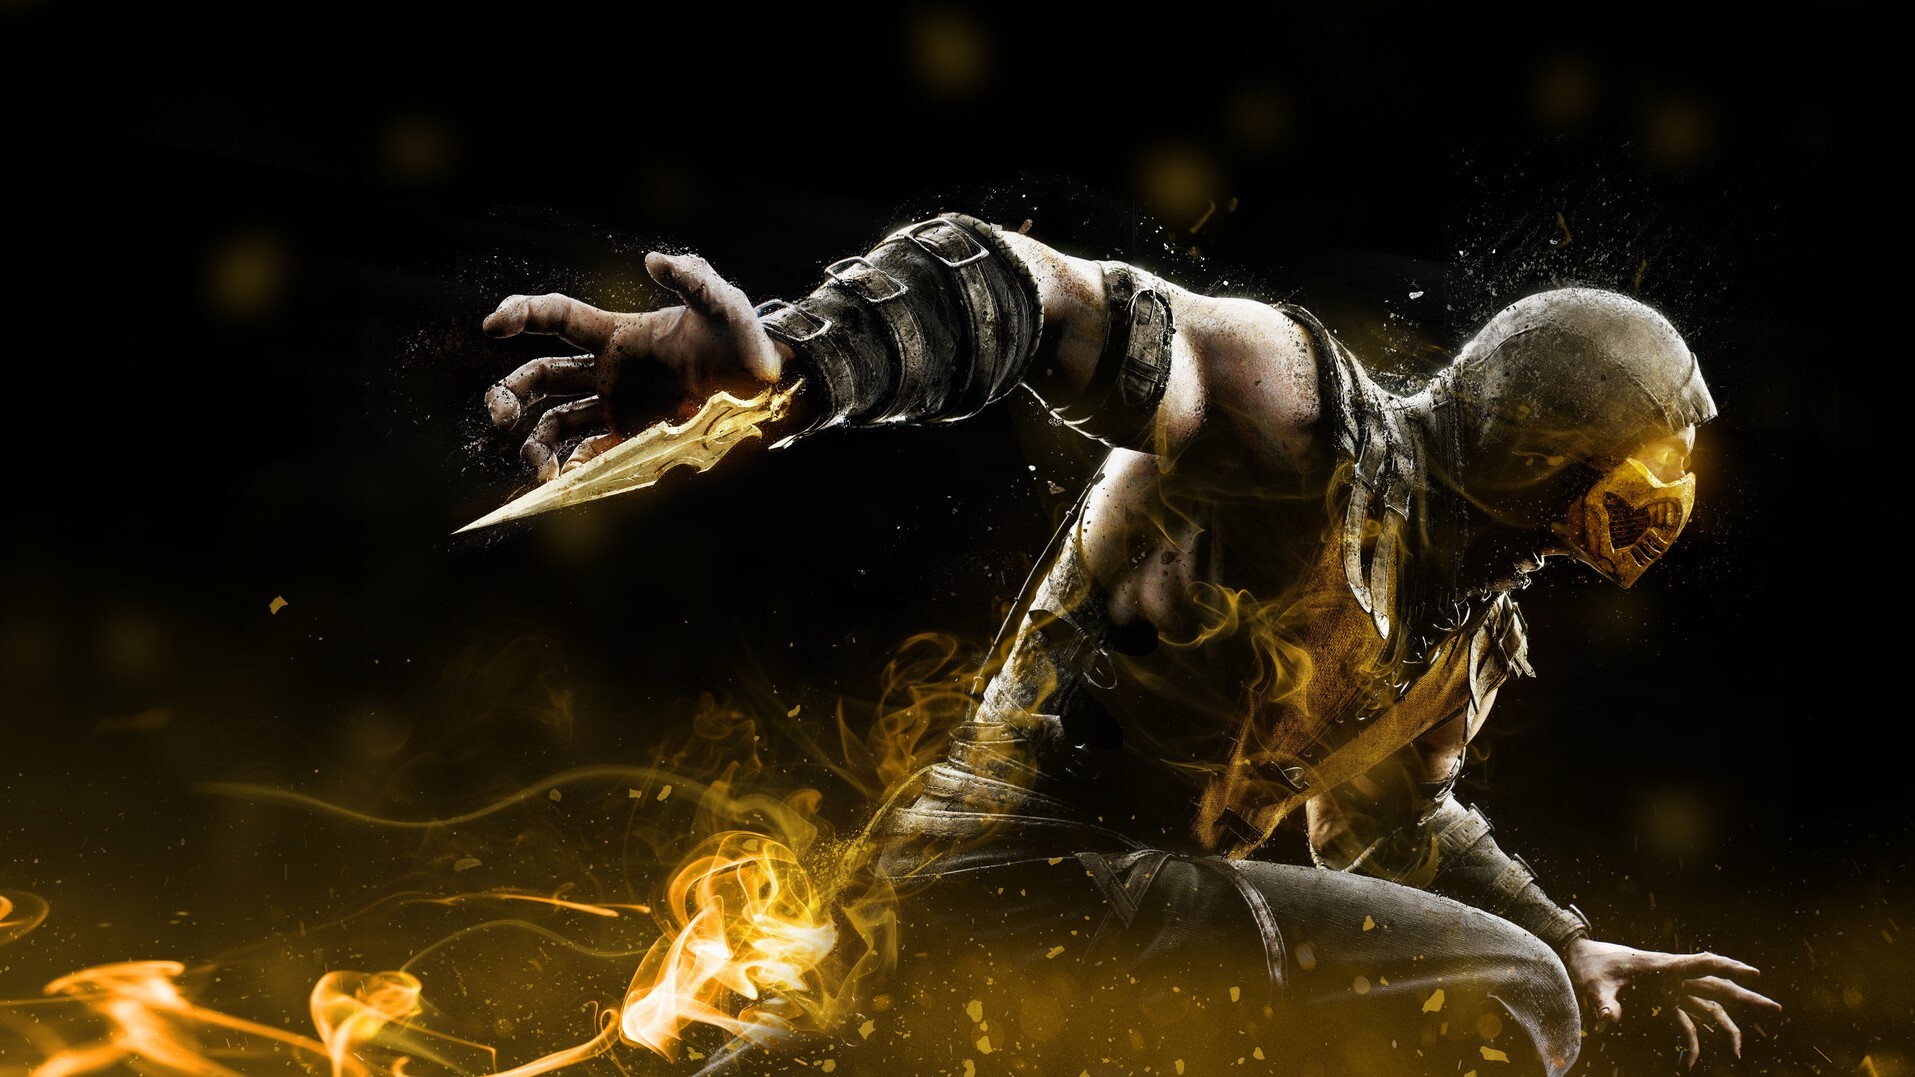 100+] Mortal Kombat Wallpapers | Wallpapers.com